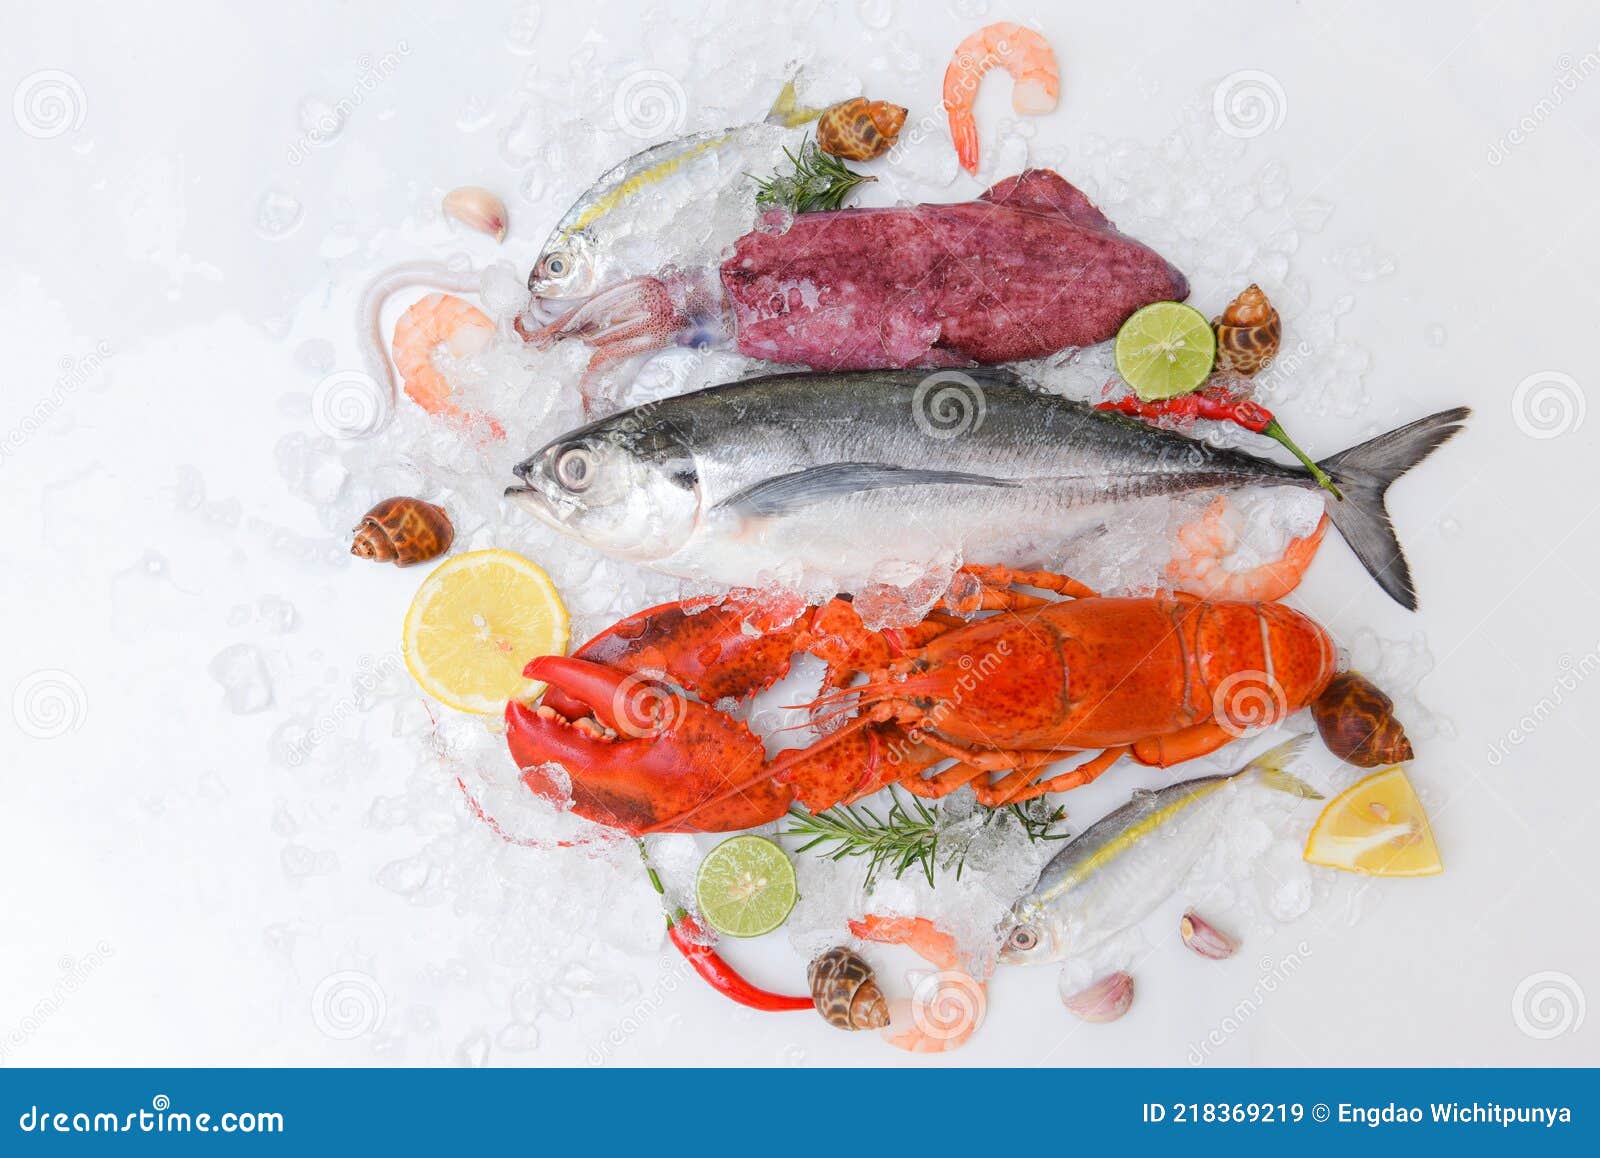 Fresh Fish And Seafood Plate With Shellfish Shrimps Prawns Crab Shell